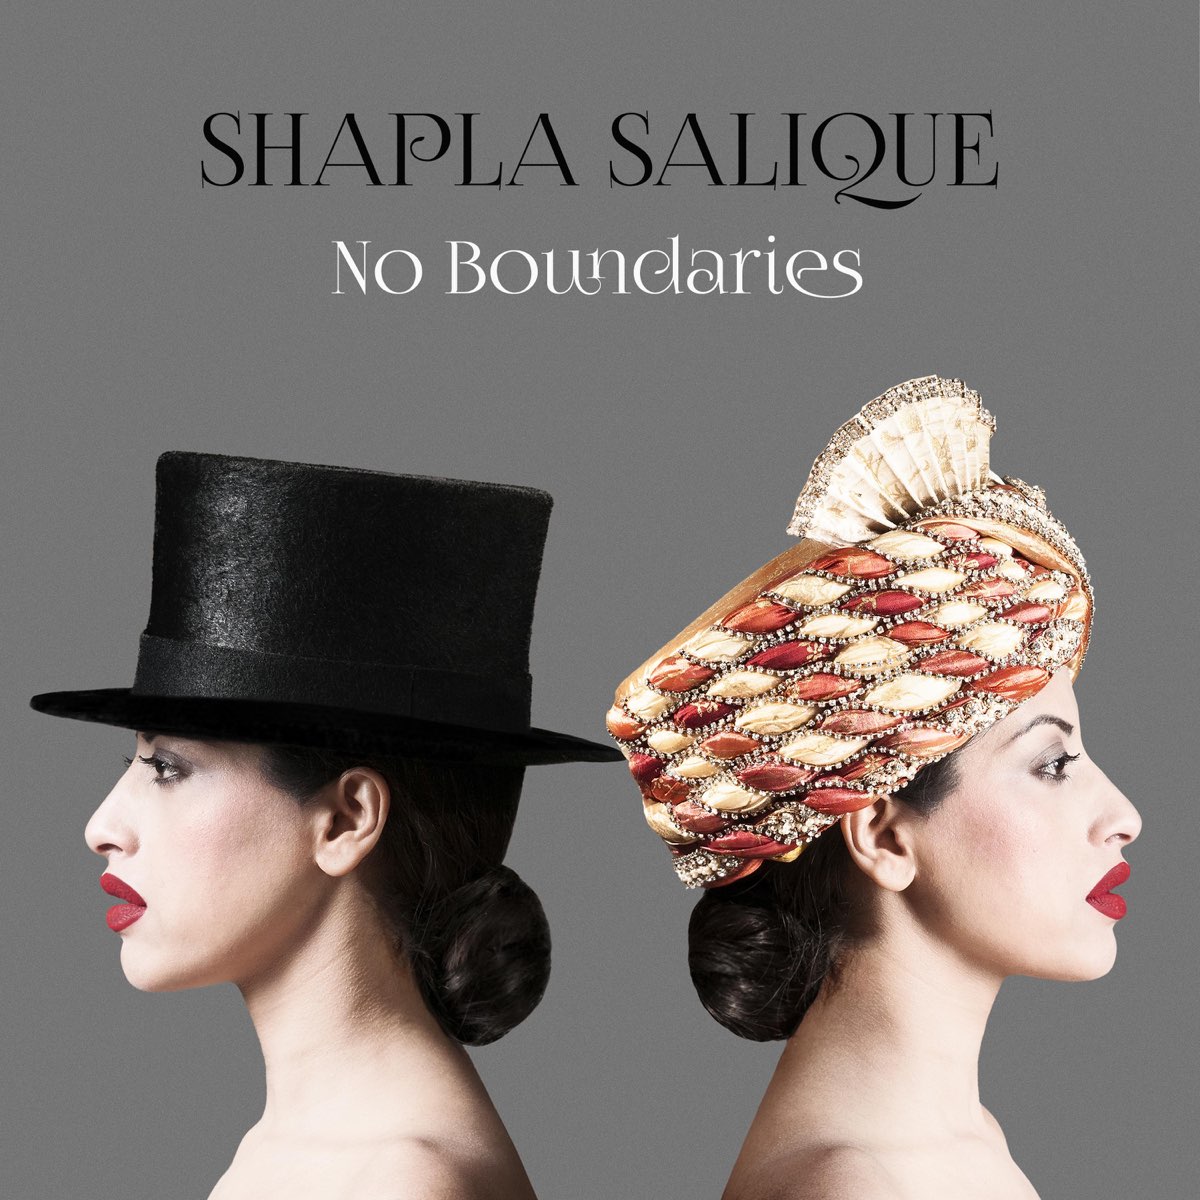 No Boundaries - Album by Shapla Salique - Apple Music